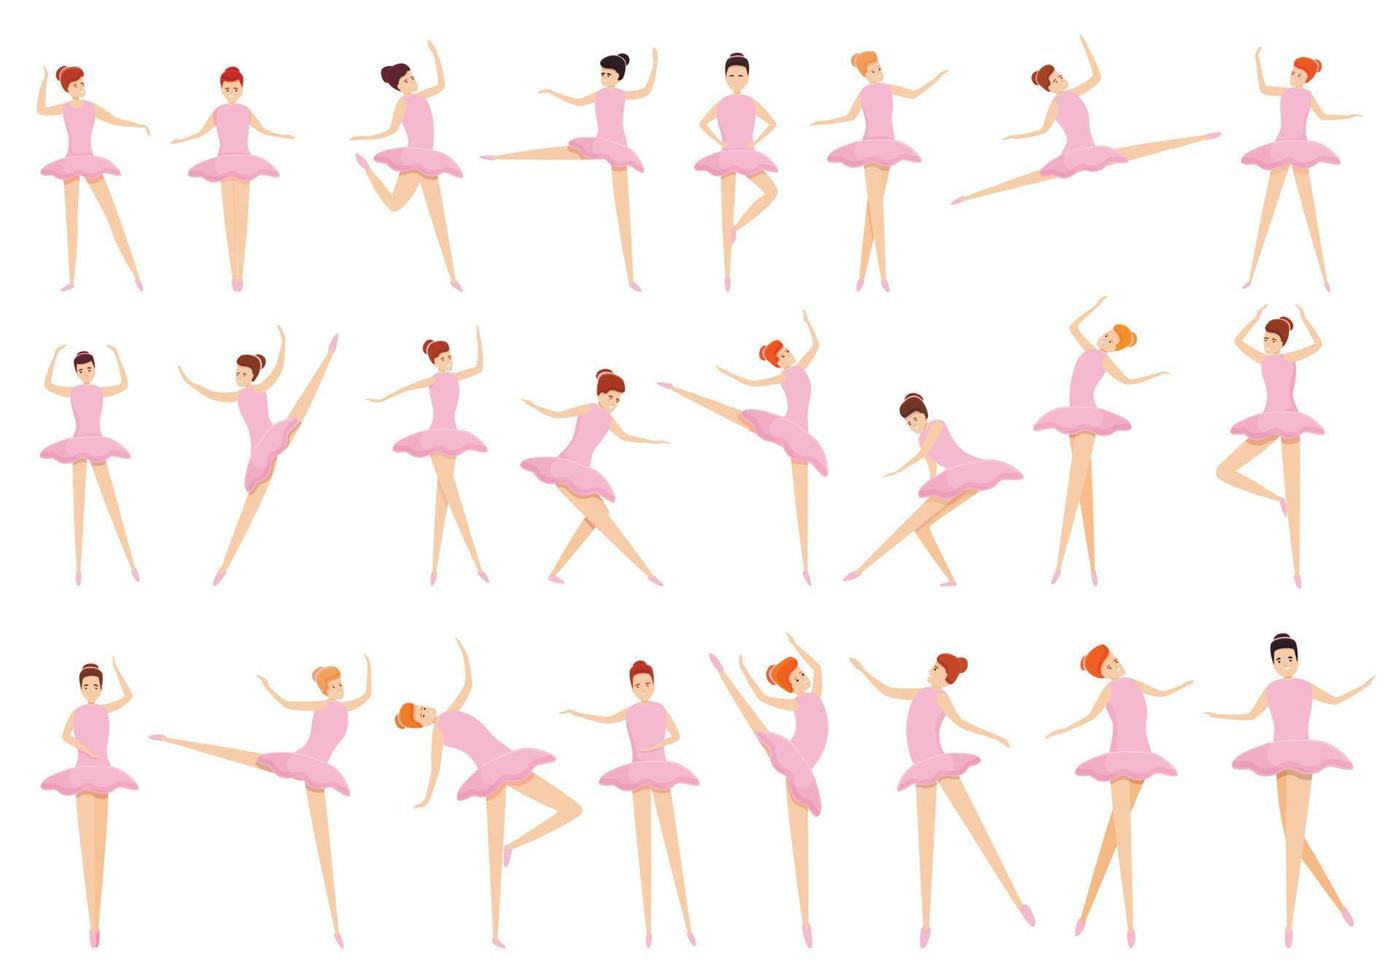 Ballett-Icons-Set, Cartoon-Stil vektor